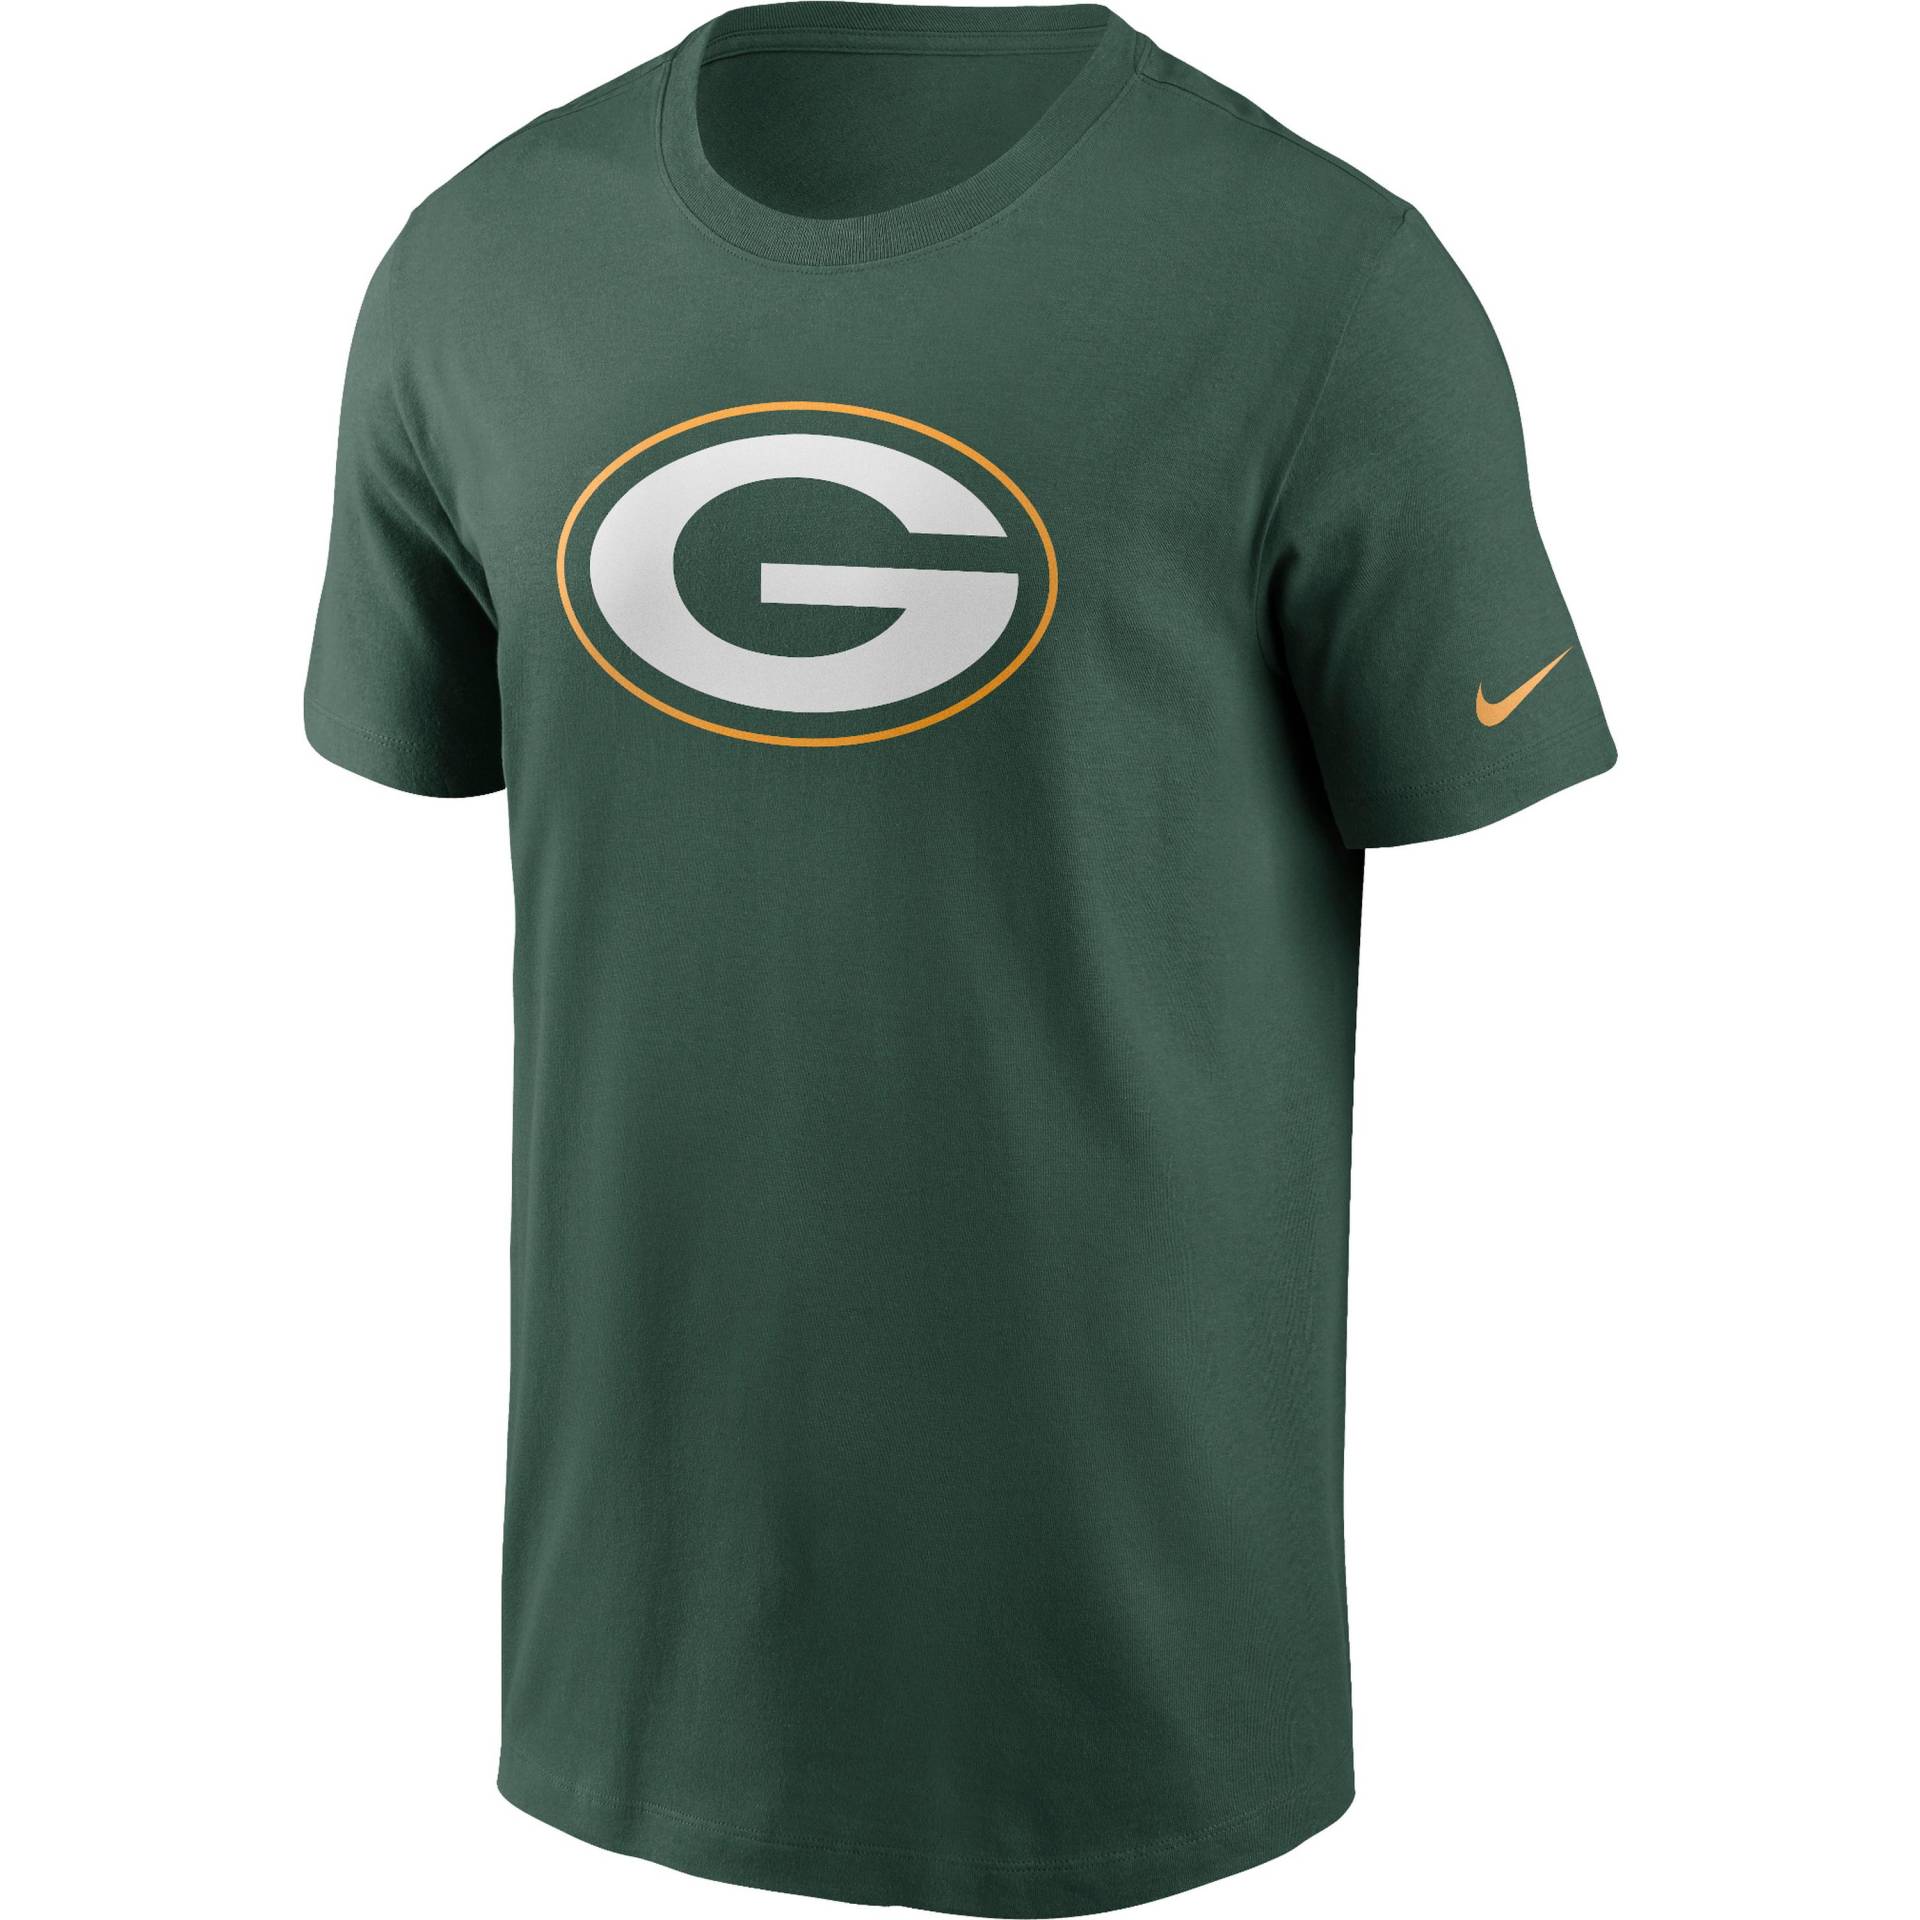 Nike Green Bay Packers Fanshirt Herren von Nike